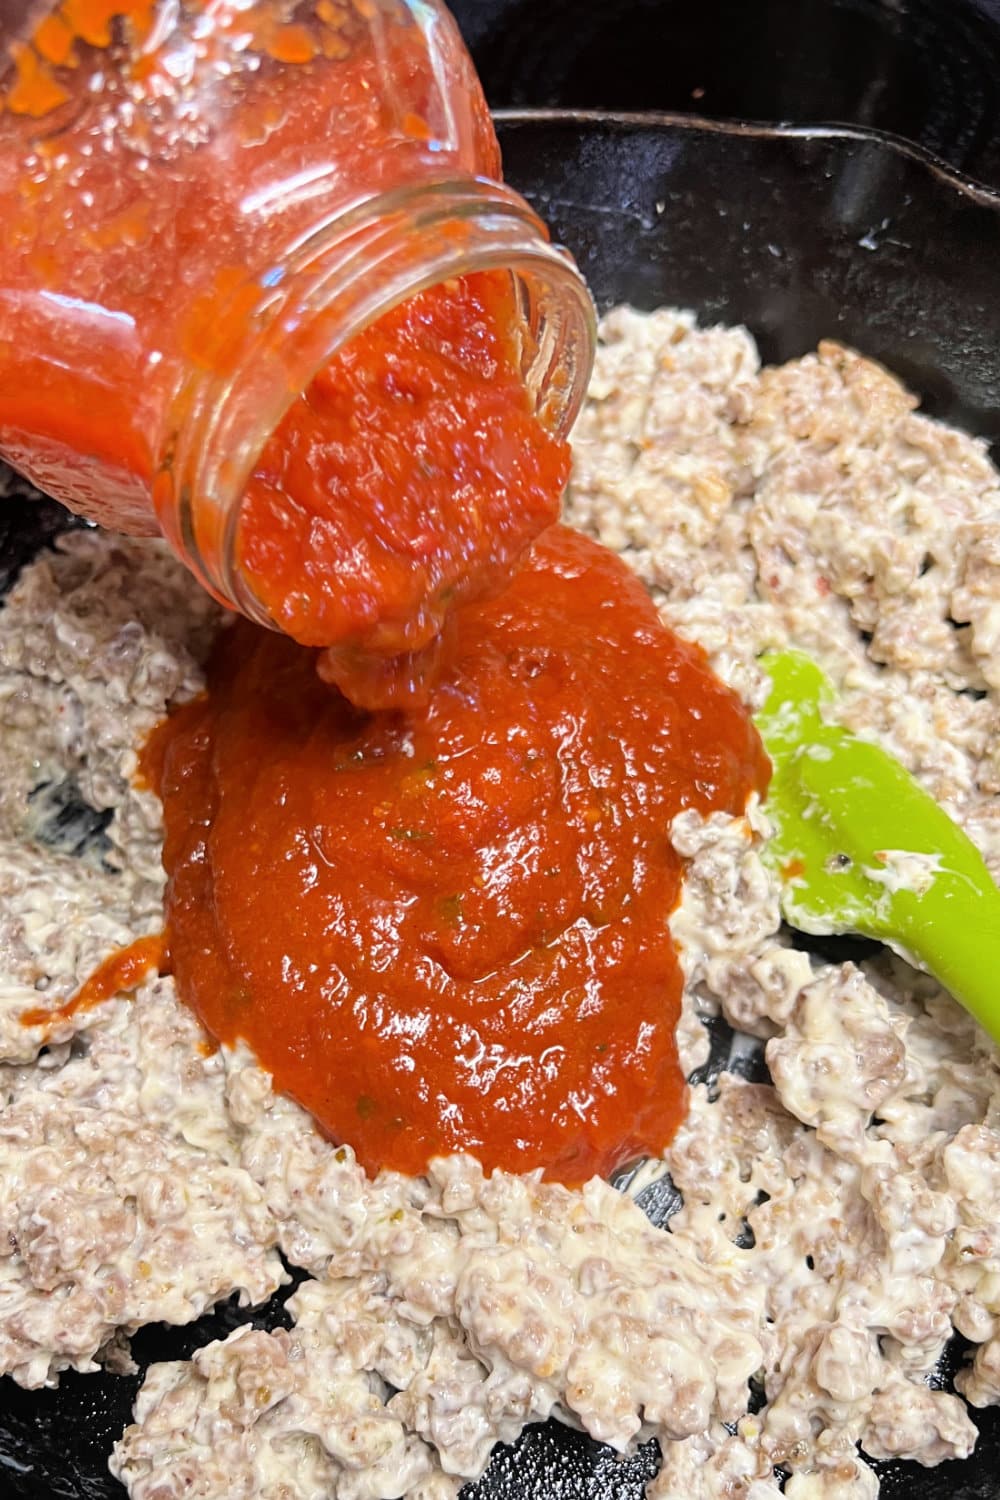 Marinara sauce added to crumbled sausage. 